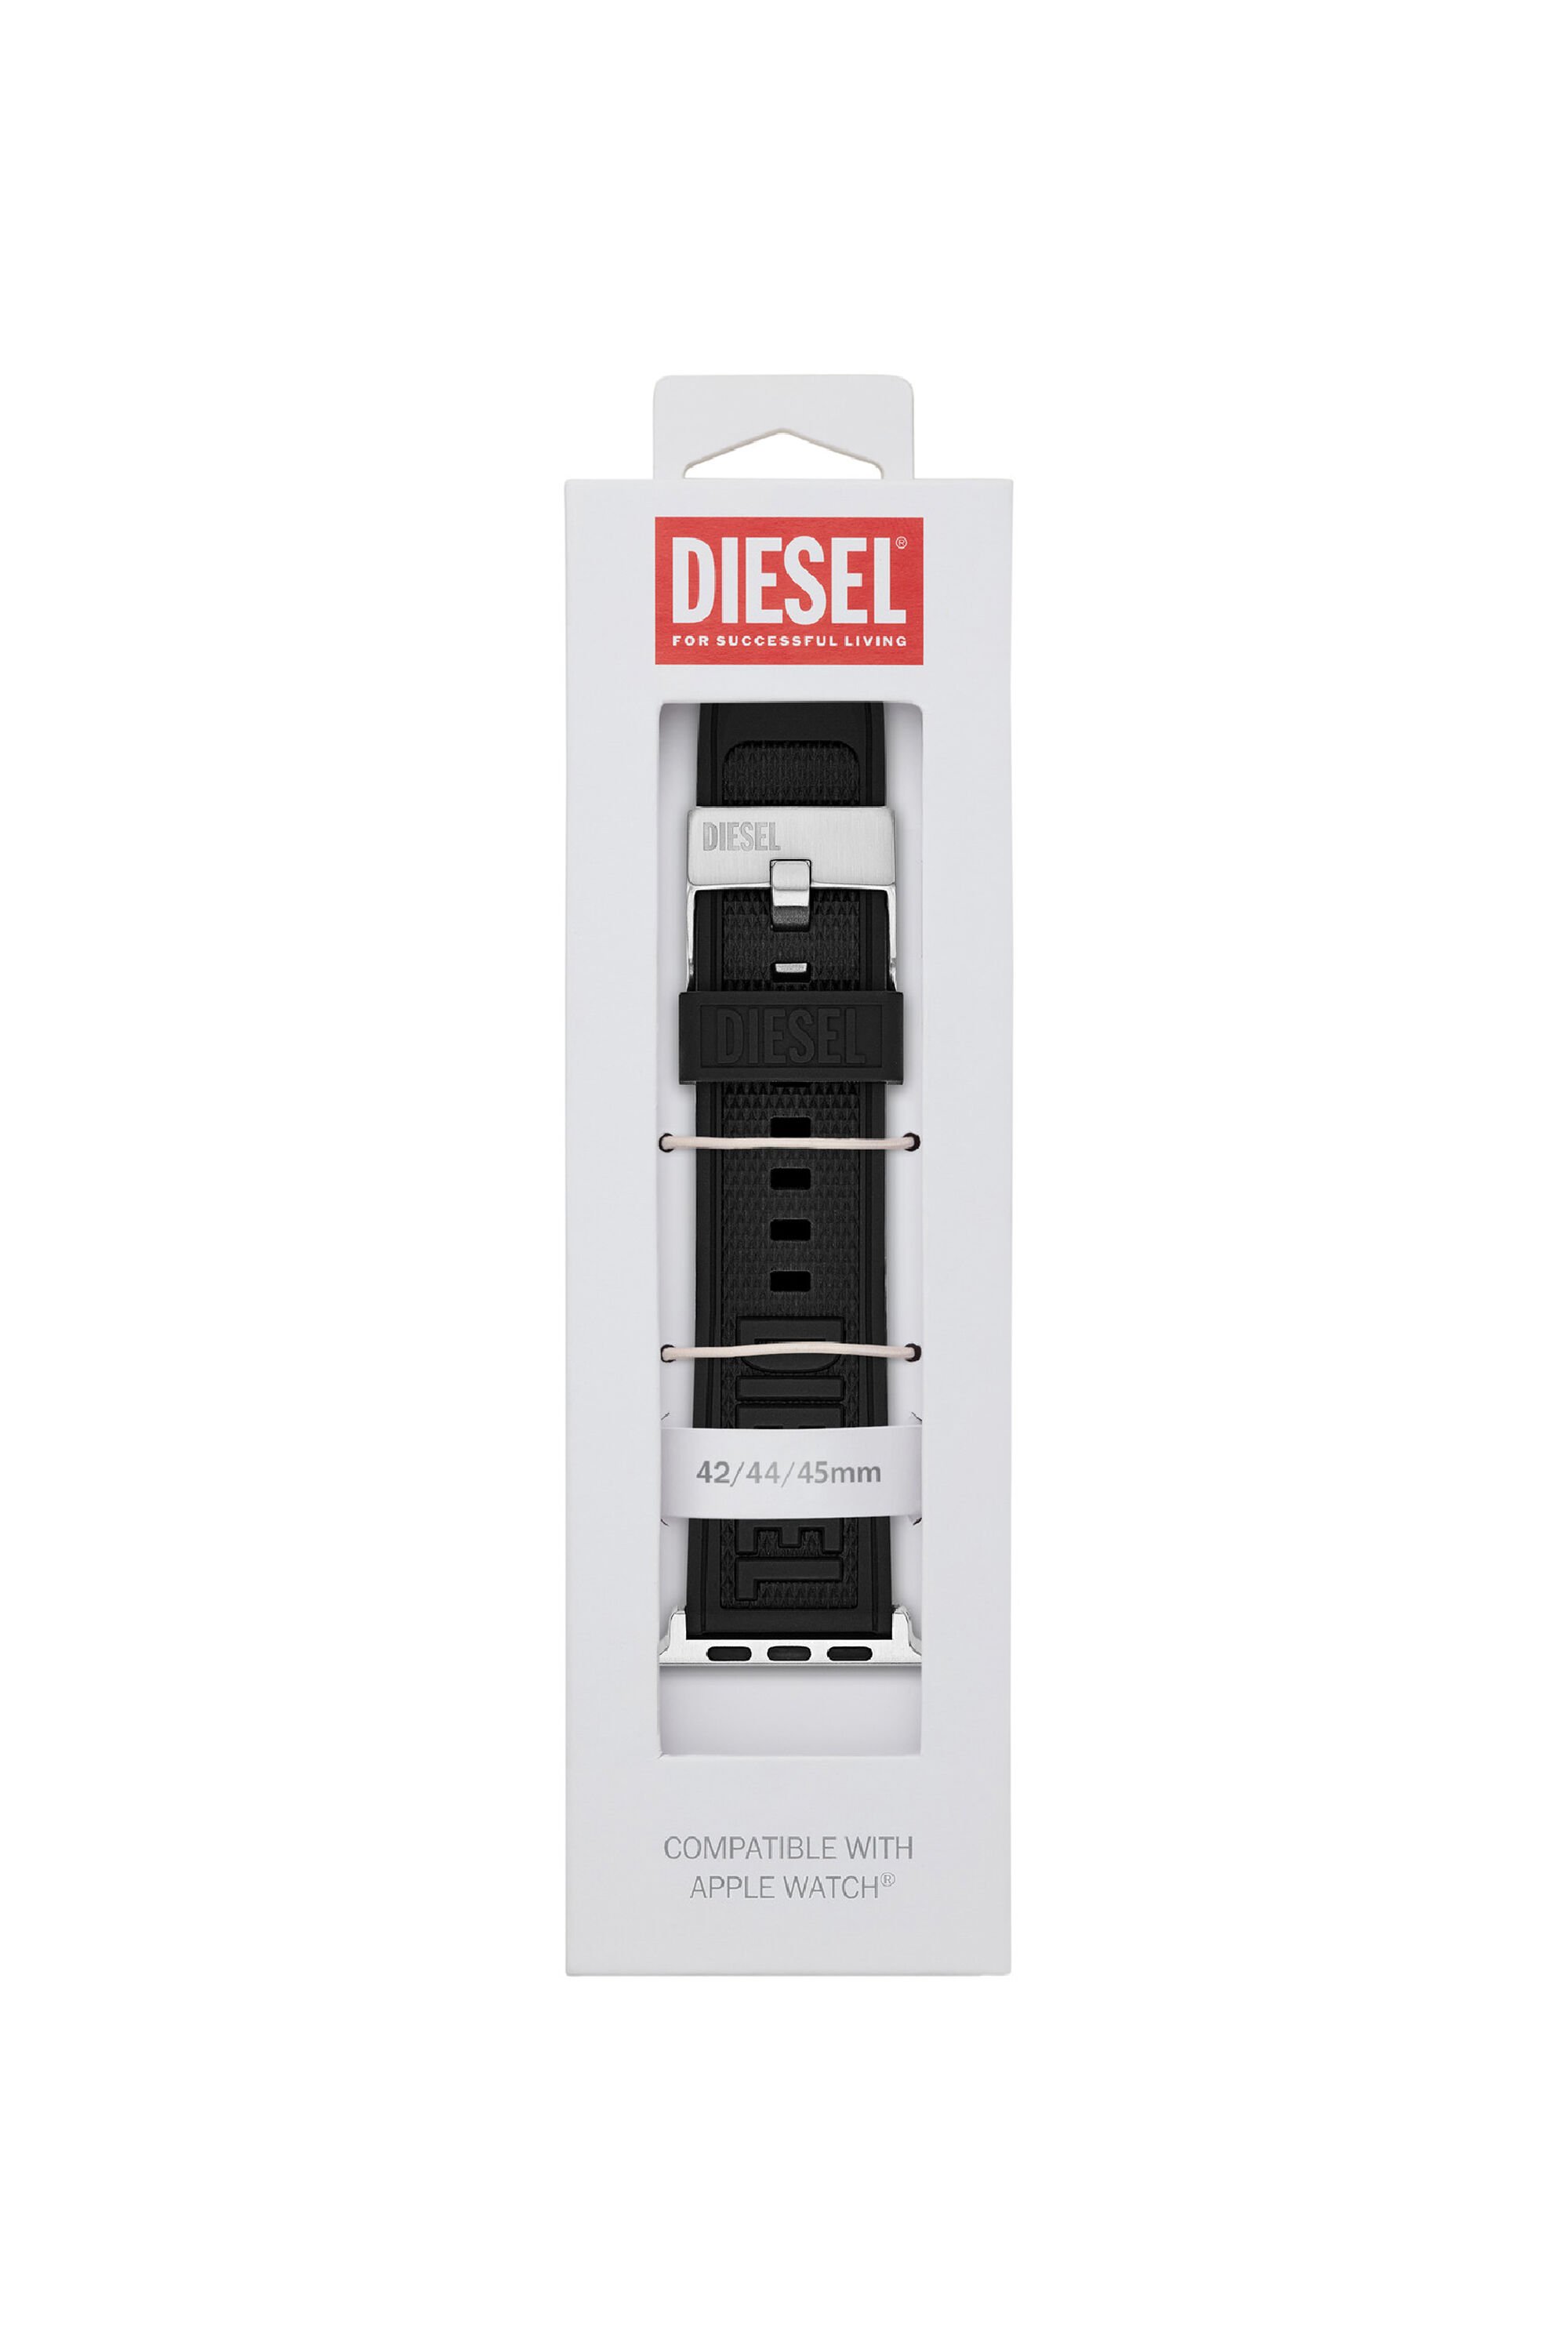 Diesel - DSS0014, ブラック - Image 2